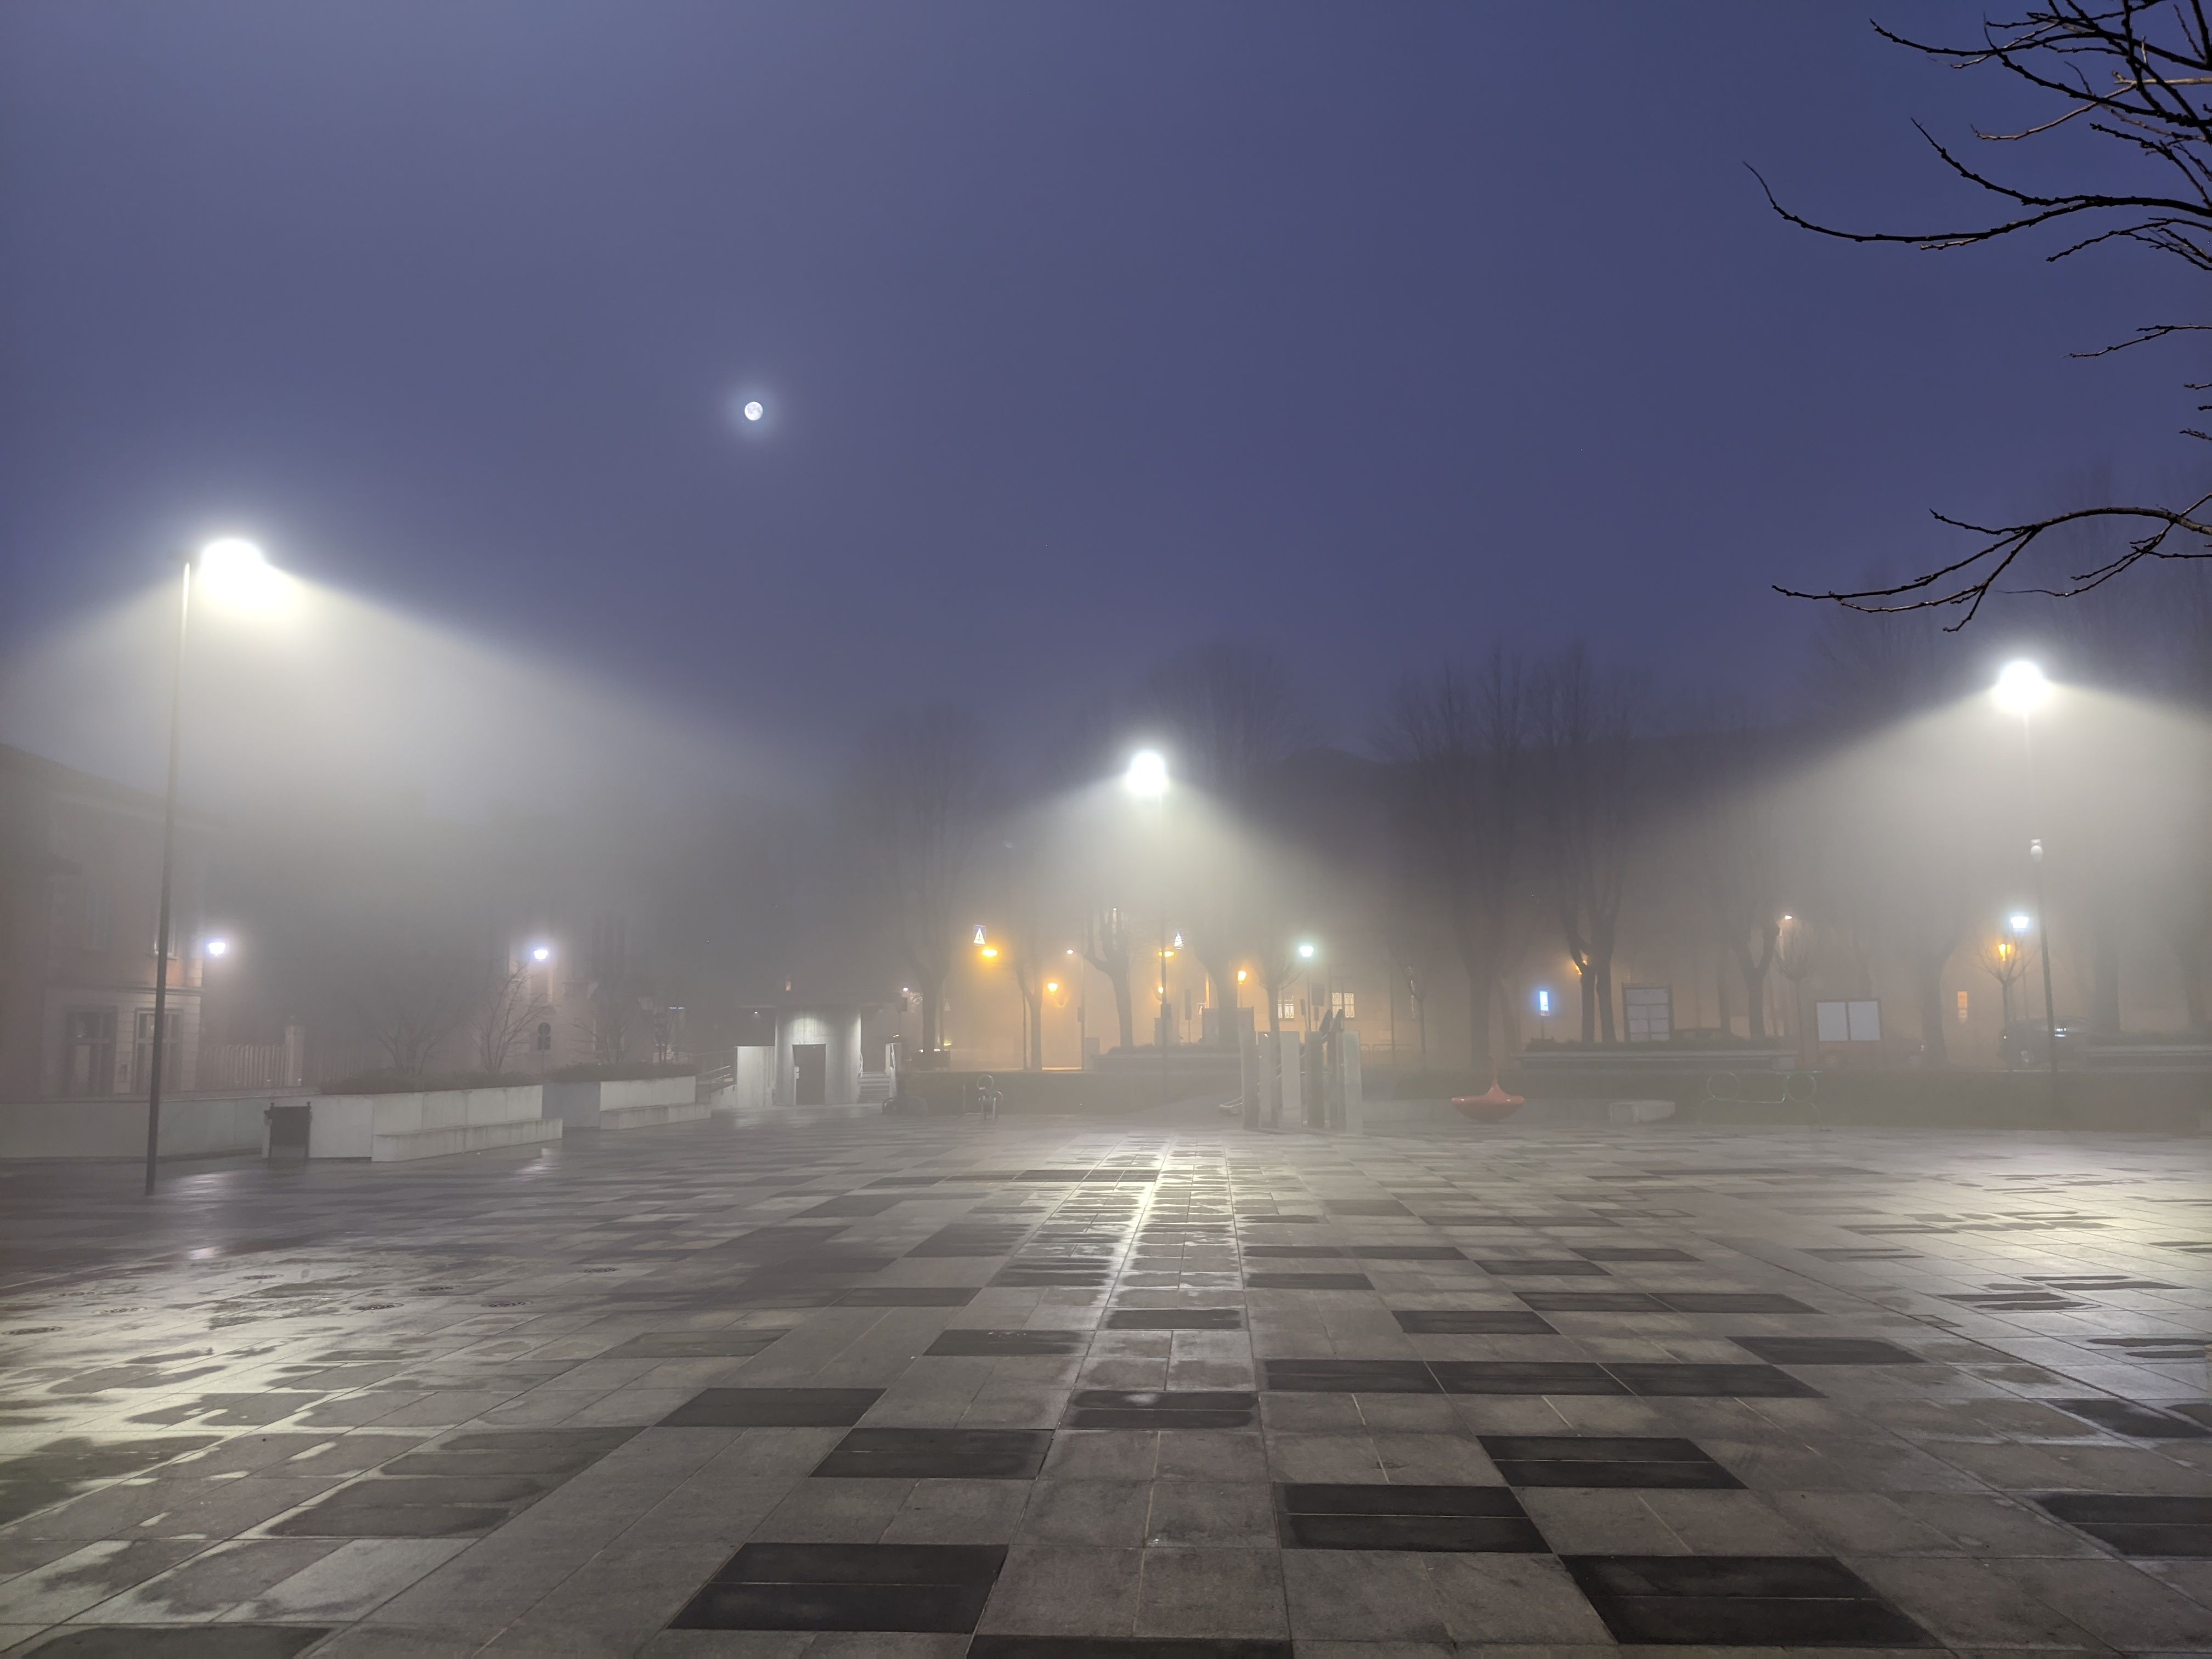 Piazza Setti square in Treviglio surrounded by fog